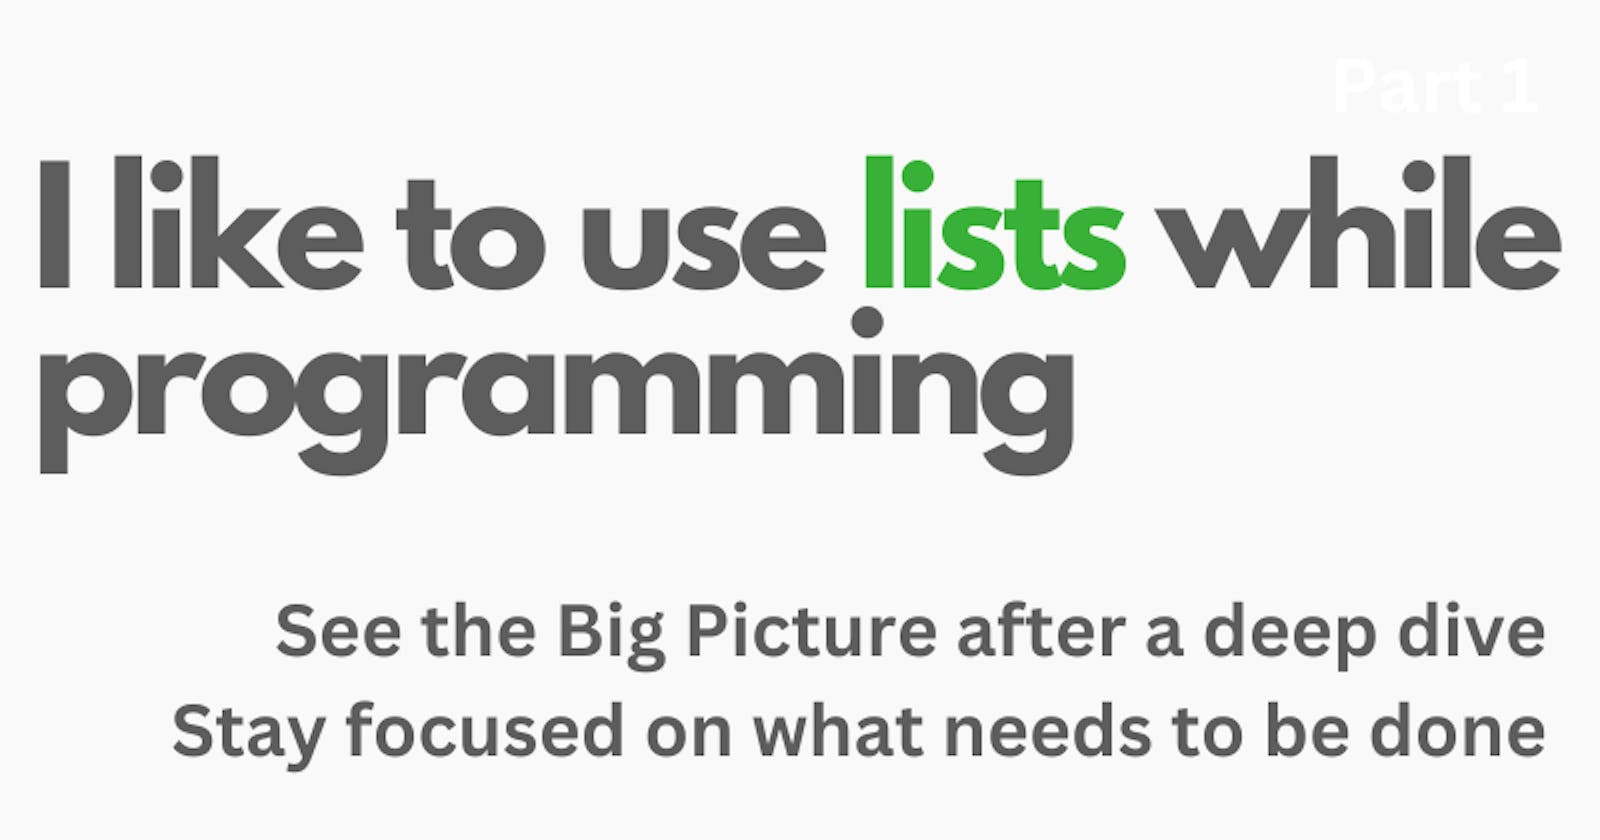 I like to use lists while programming